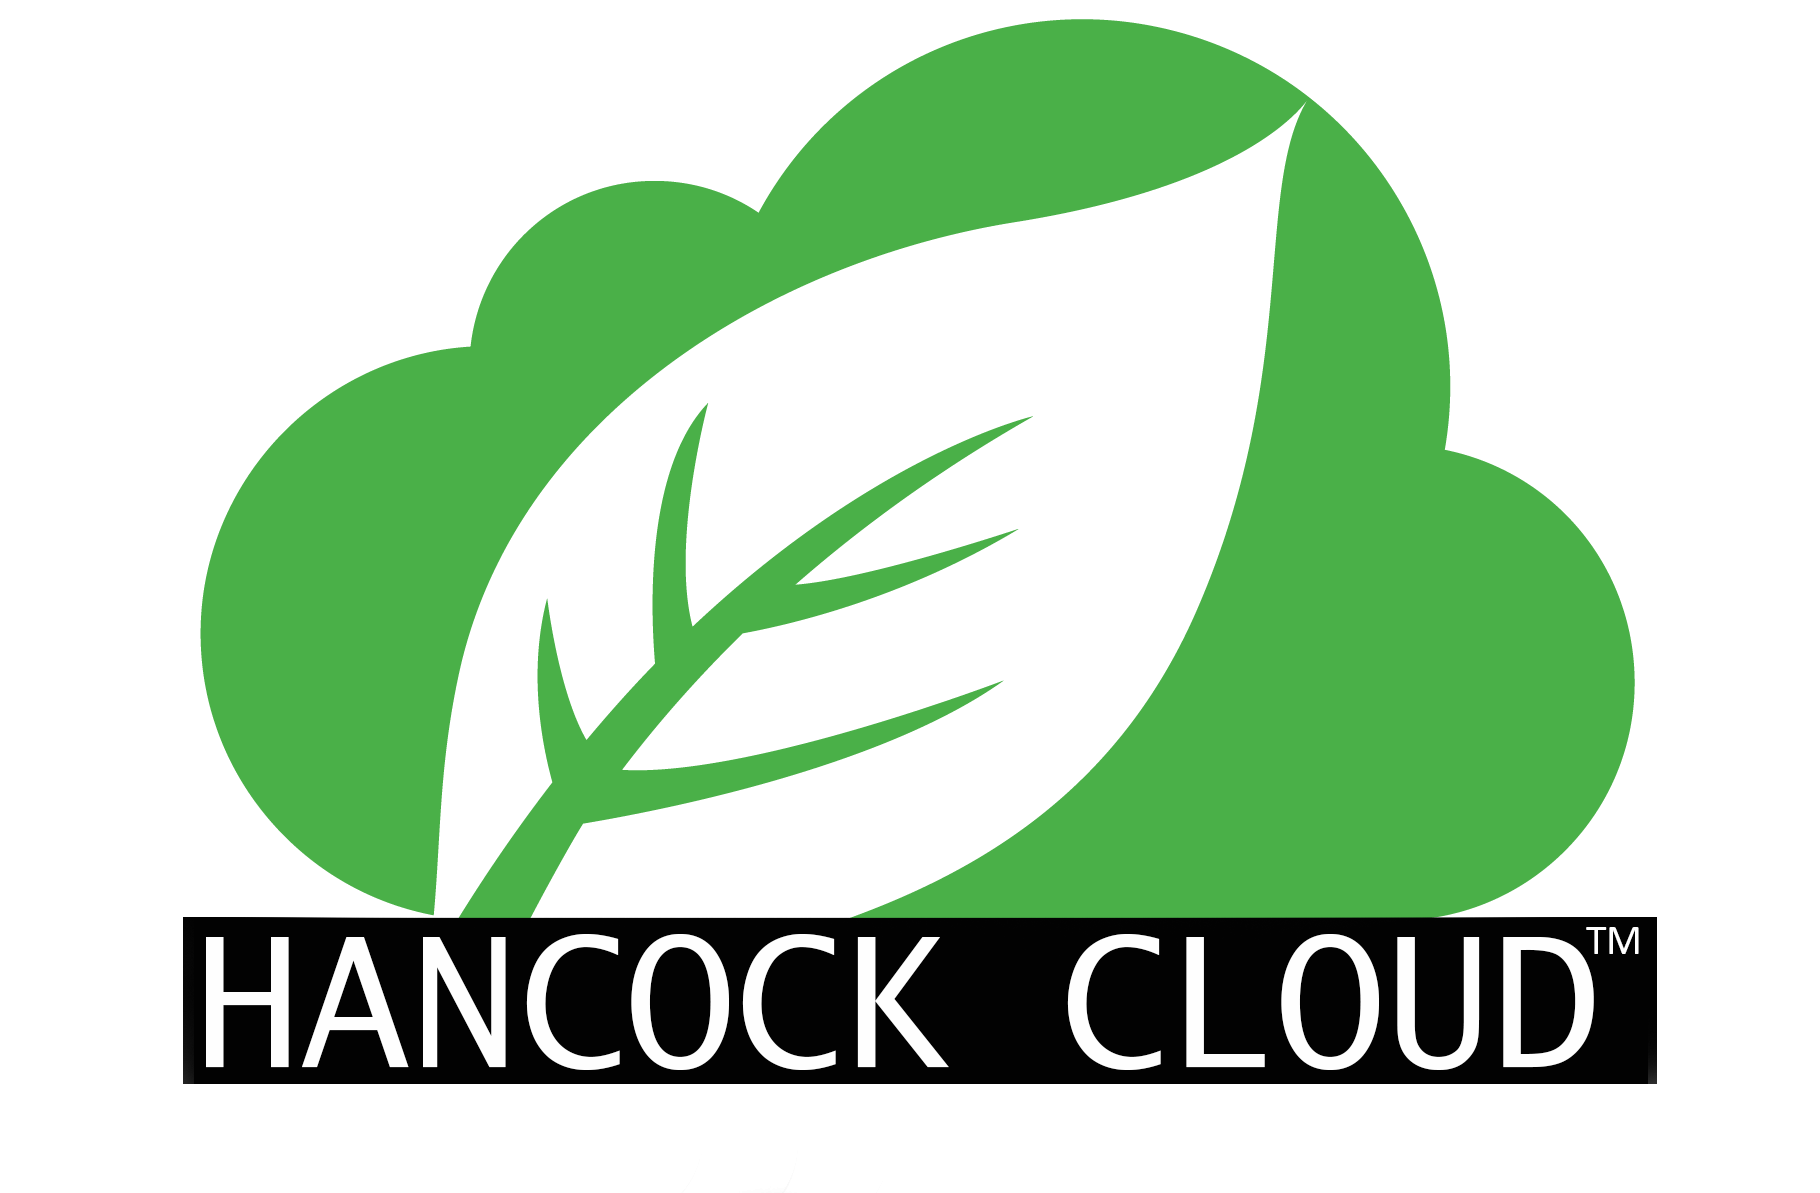 HancockCloud Logo PNG